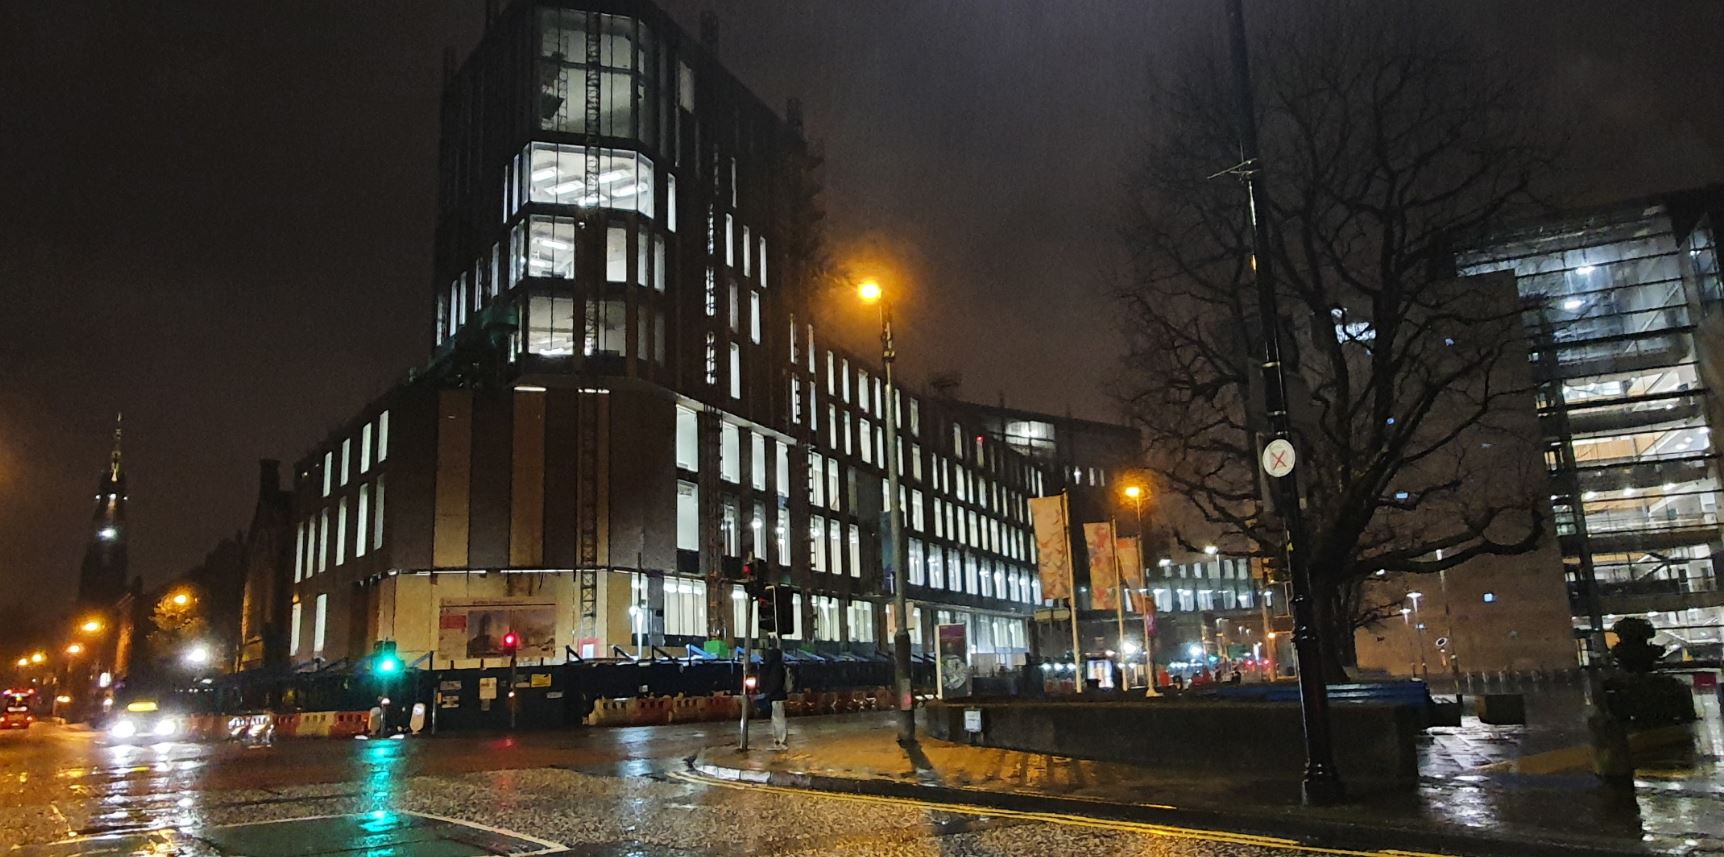 Picture of Belfast Campus